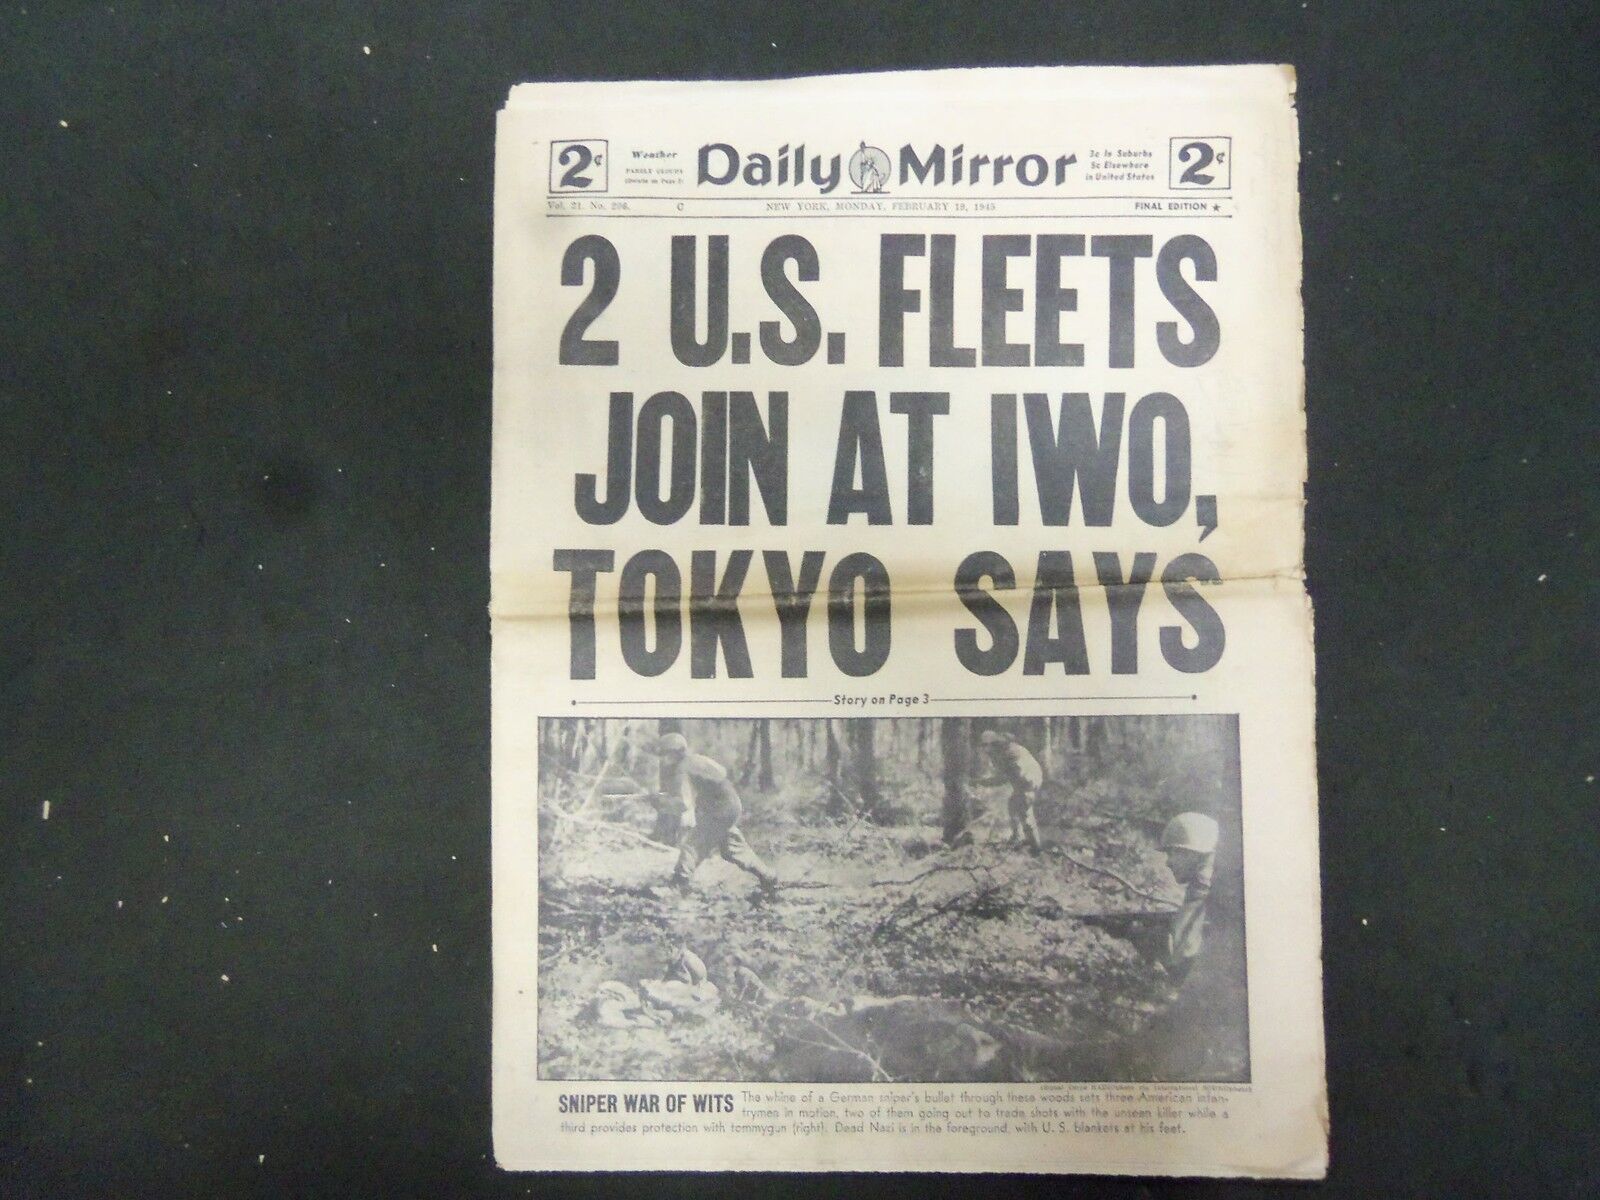 1945 FEB 19 NEW YORK DAILY MIRROR- 2 US FLEETS JOIN AT IWO, TOKYO SAYS - NP 2229